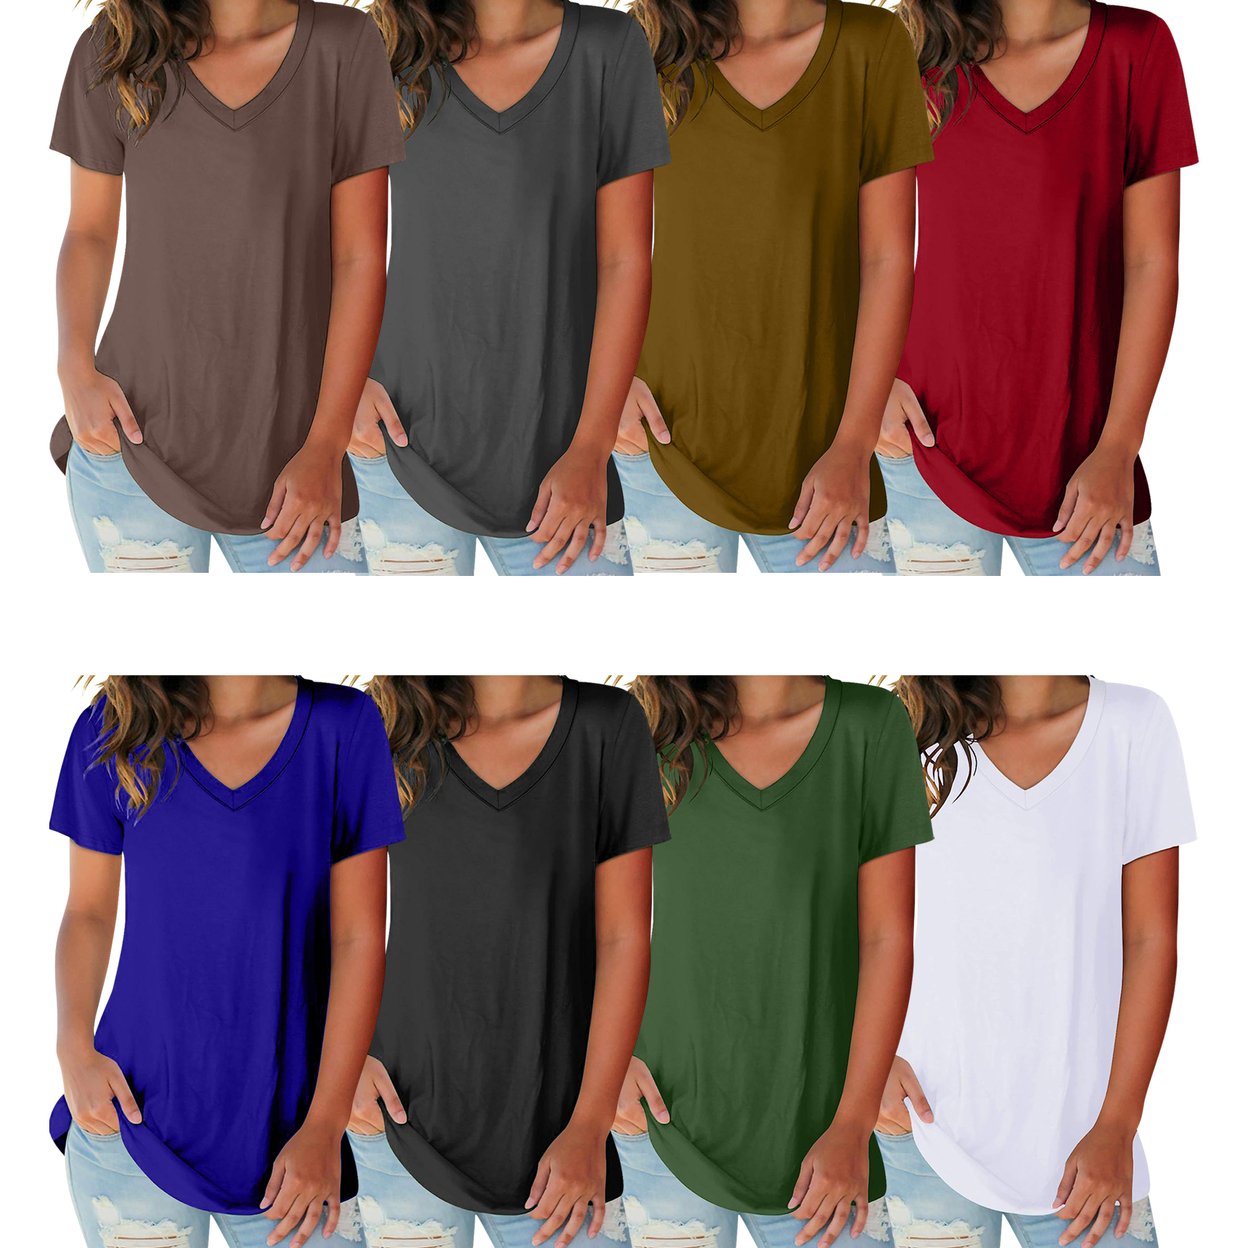 Women's Ultra-Soft Smooth Cotton Blend Basic V-Neck Short Sleeve Shirts - Black, Large